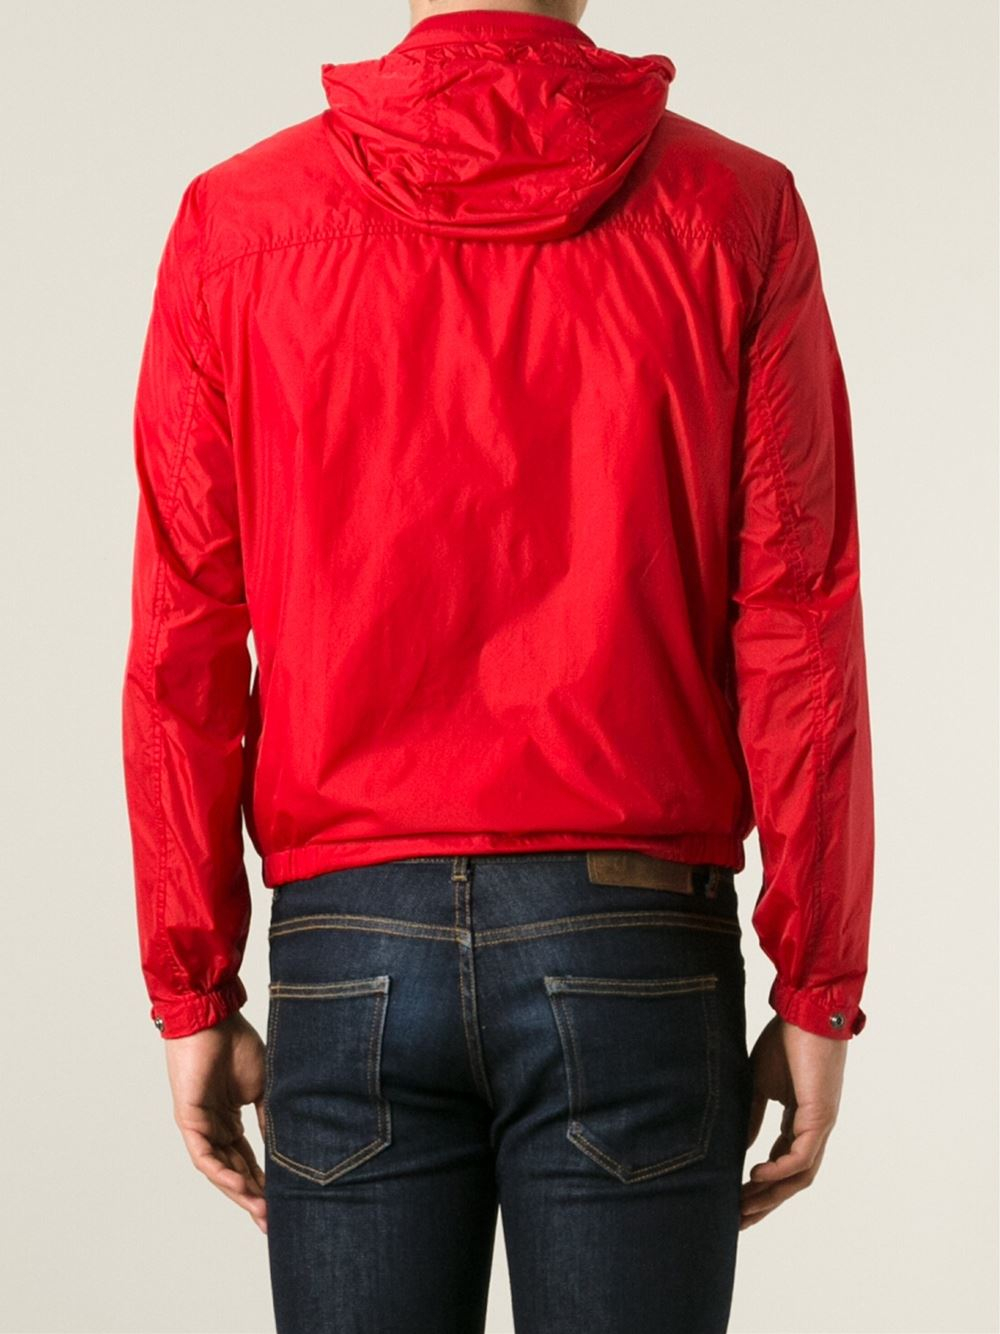 Moncler Classic Windbreaker Jacket in Red for Men - Lyst